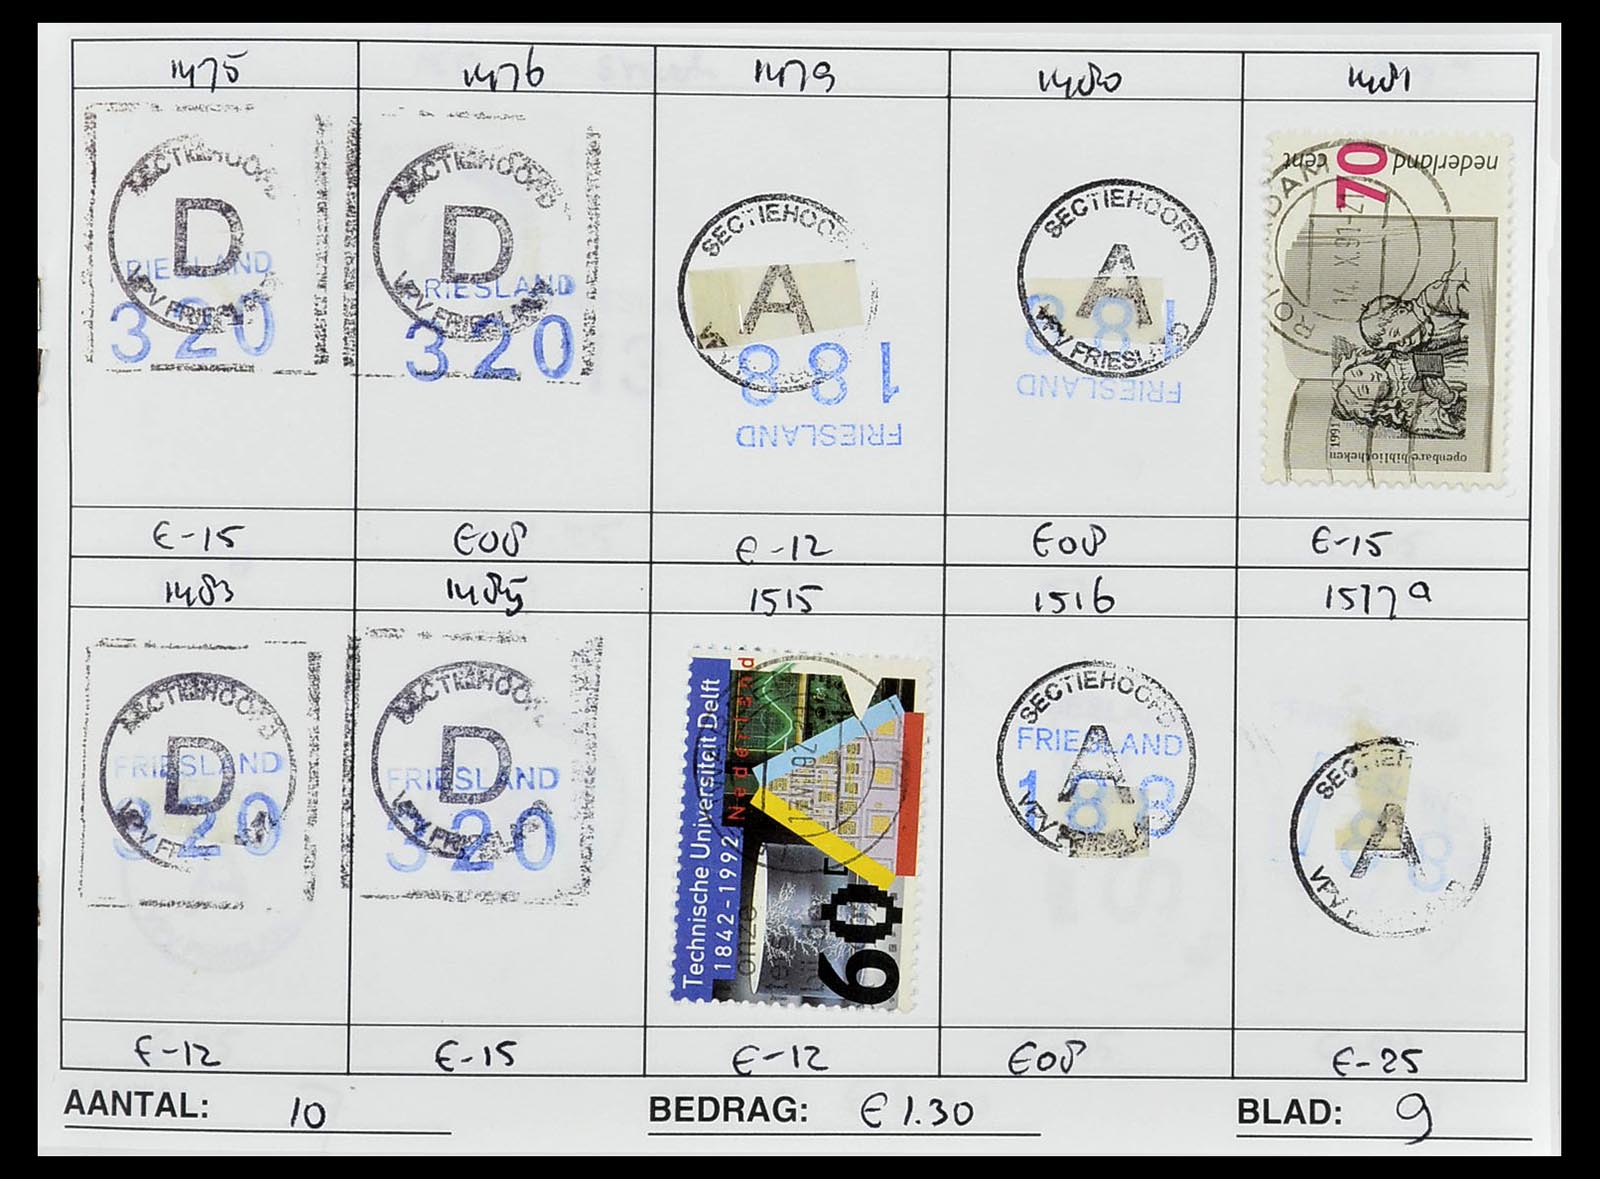 34612 1013 - Stamp Collection 34612 Wereld rondzendboekjes.